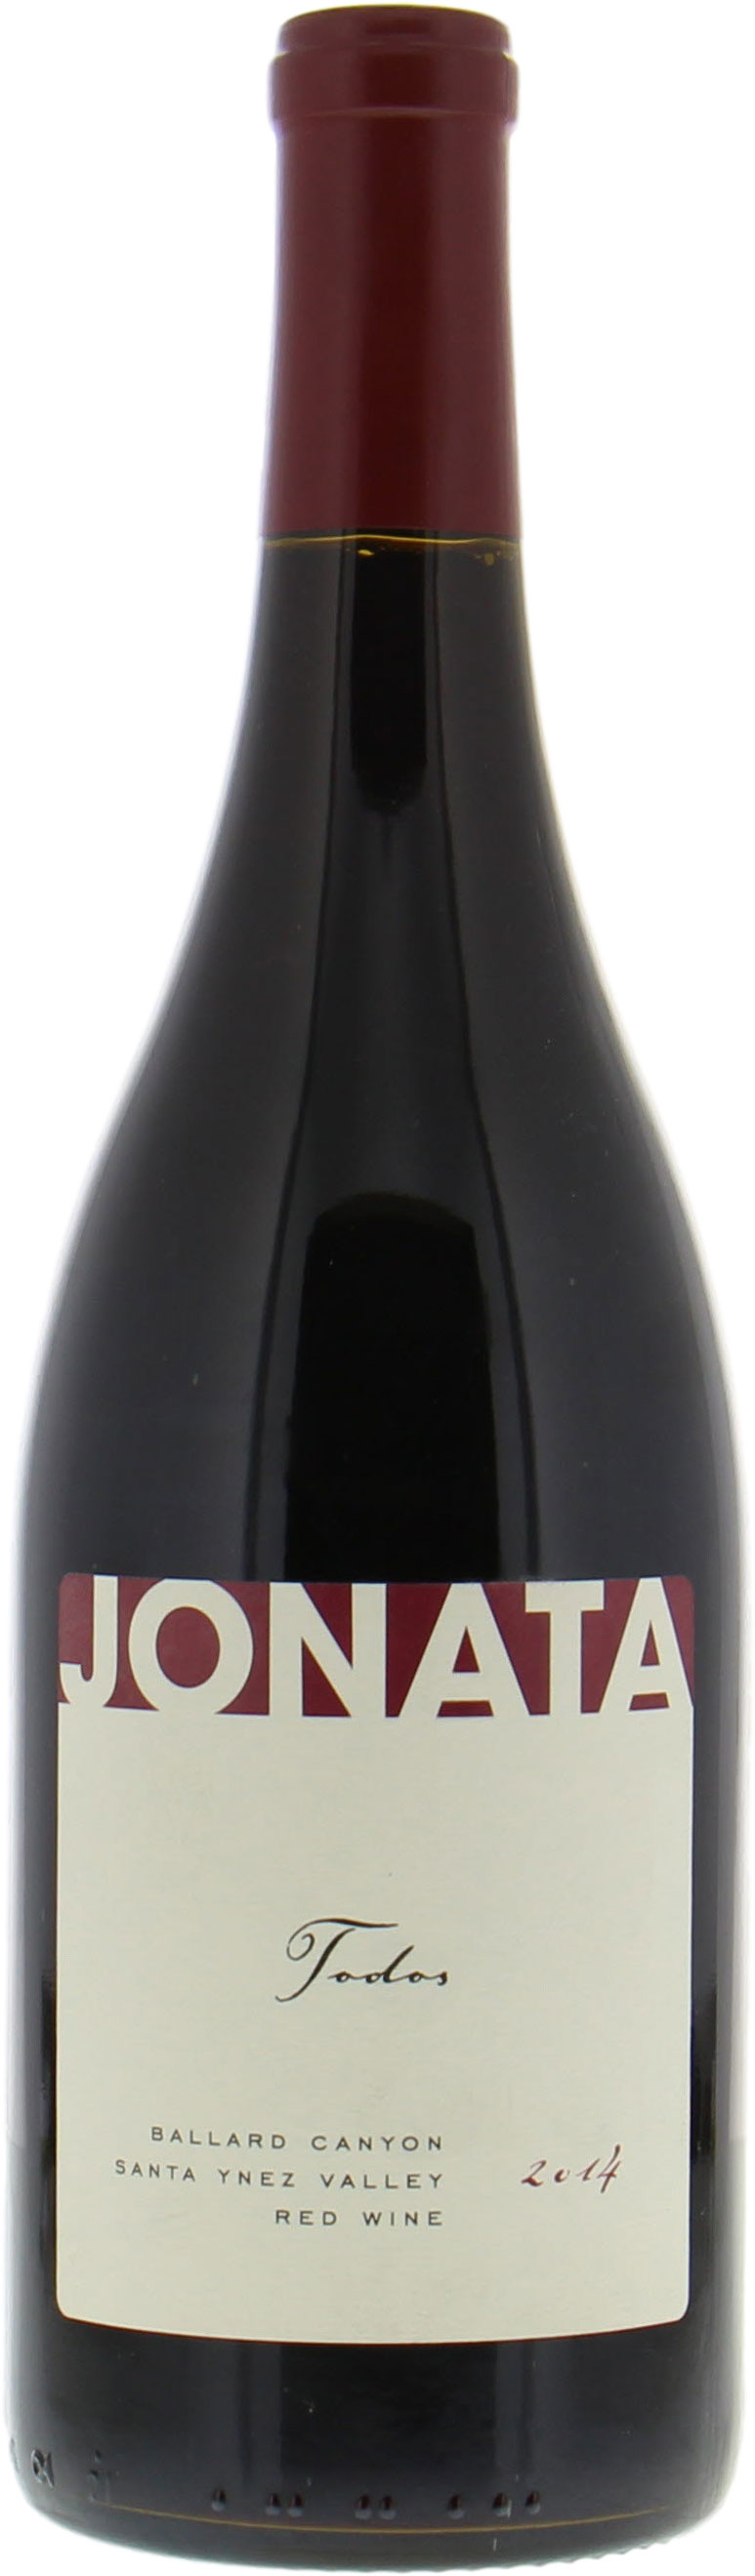 Jonata - Todos 2014 Perfect